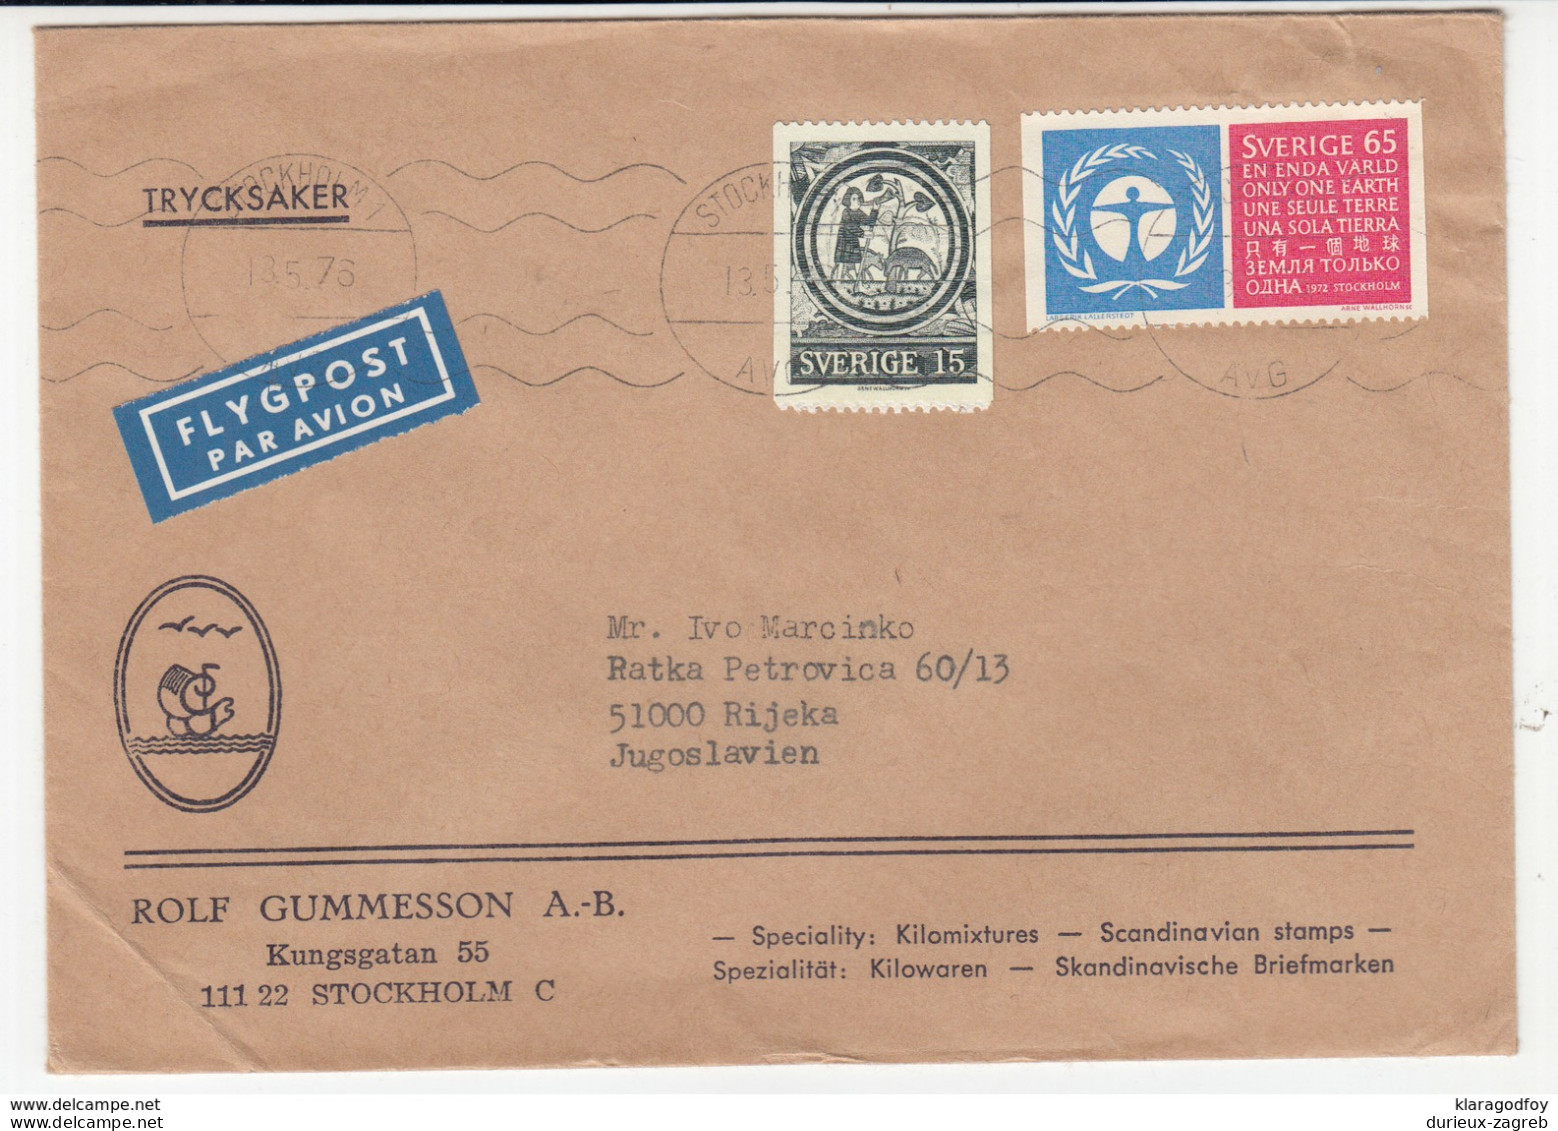 Sweden, Rolf Gummesson Company Letter Cover Airmail Travelled 1976 Stockholm Pmk B180220 - Lettres & Documents